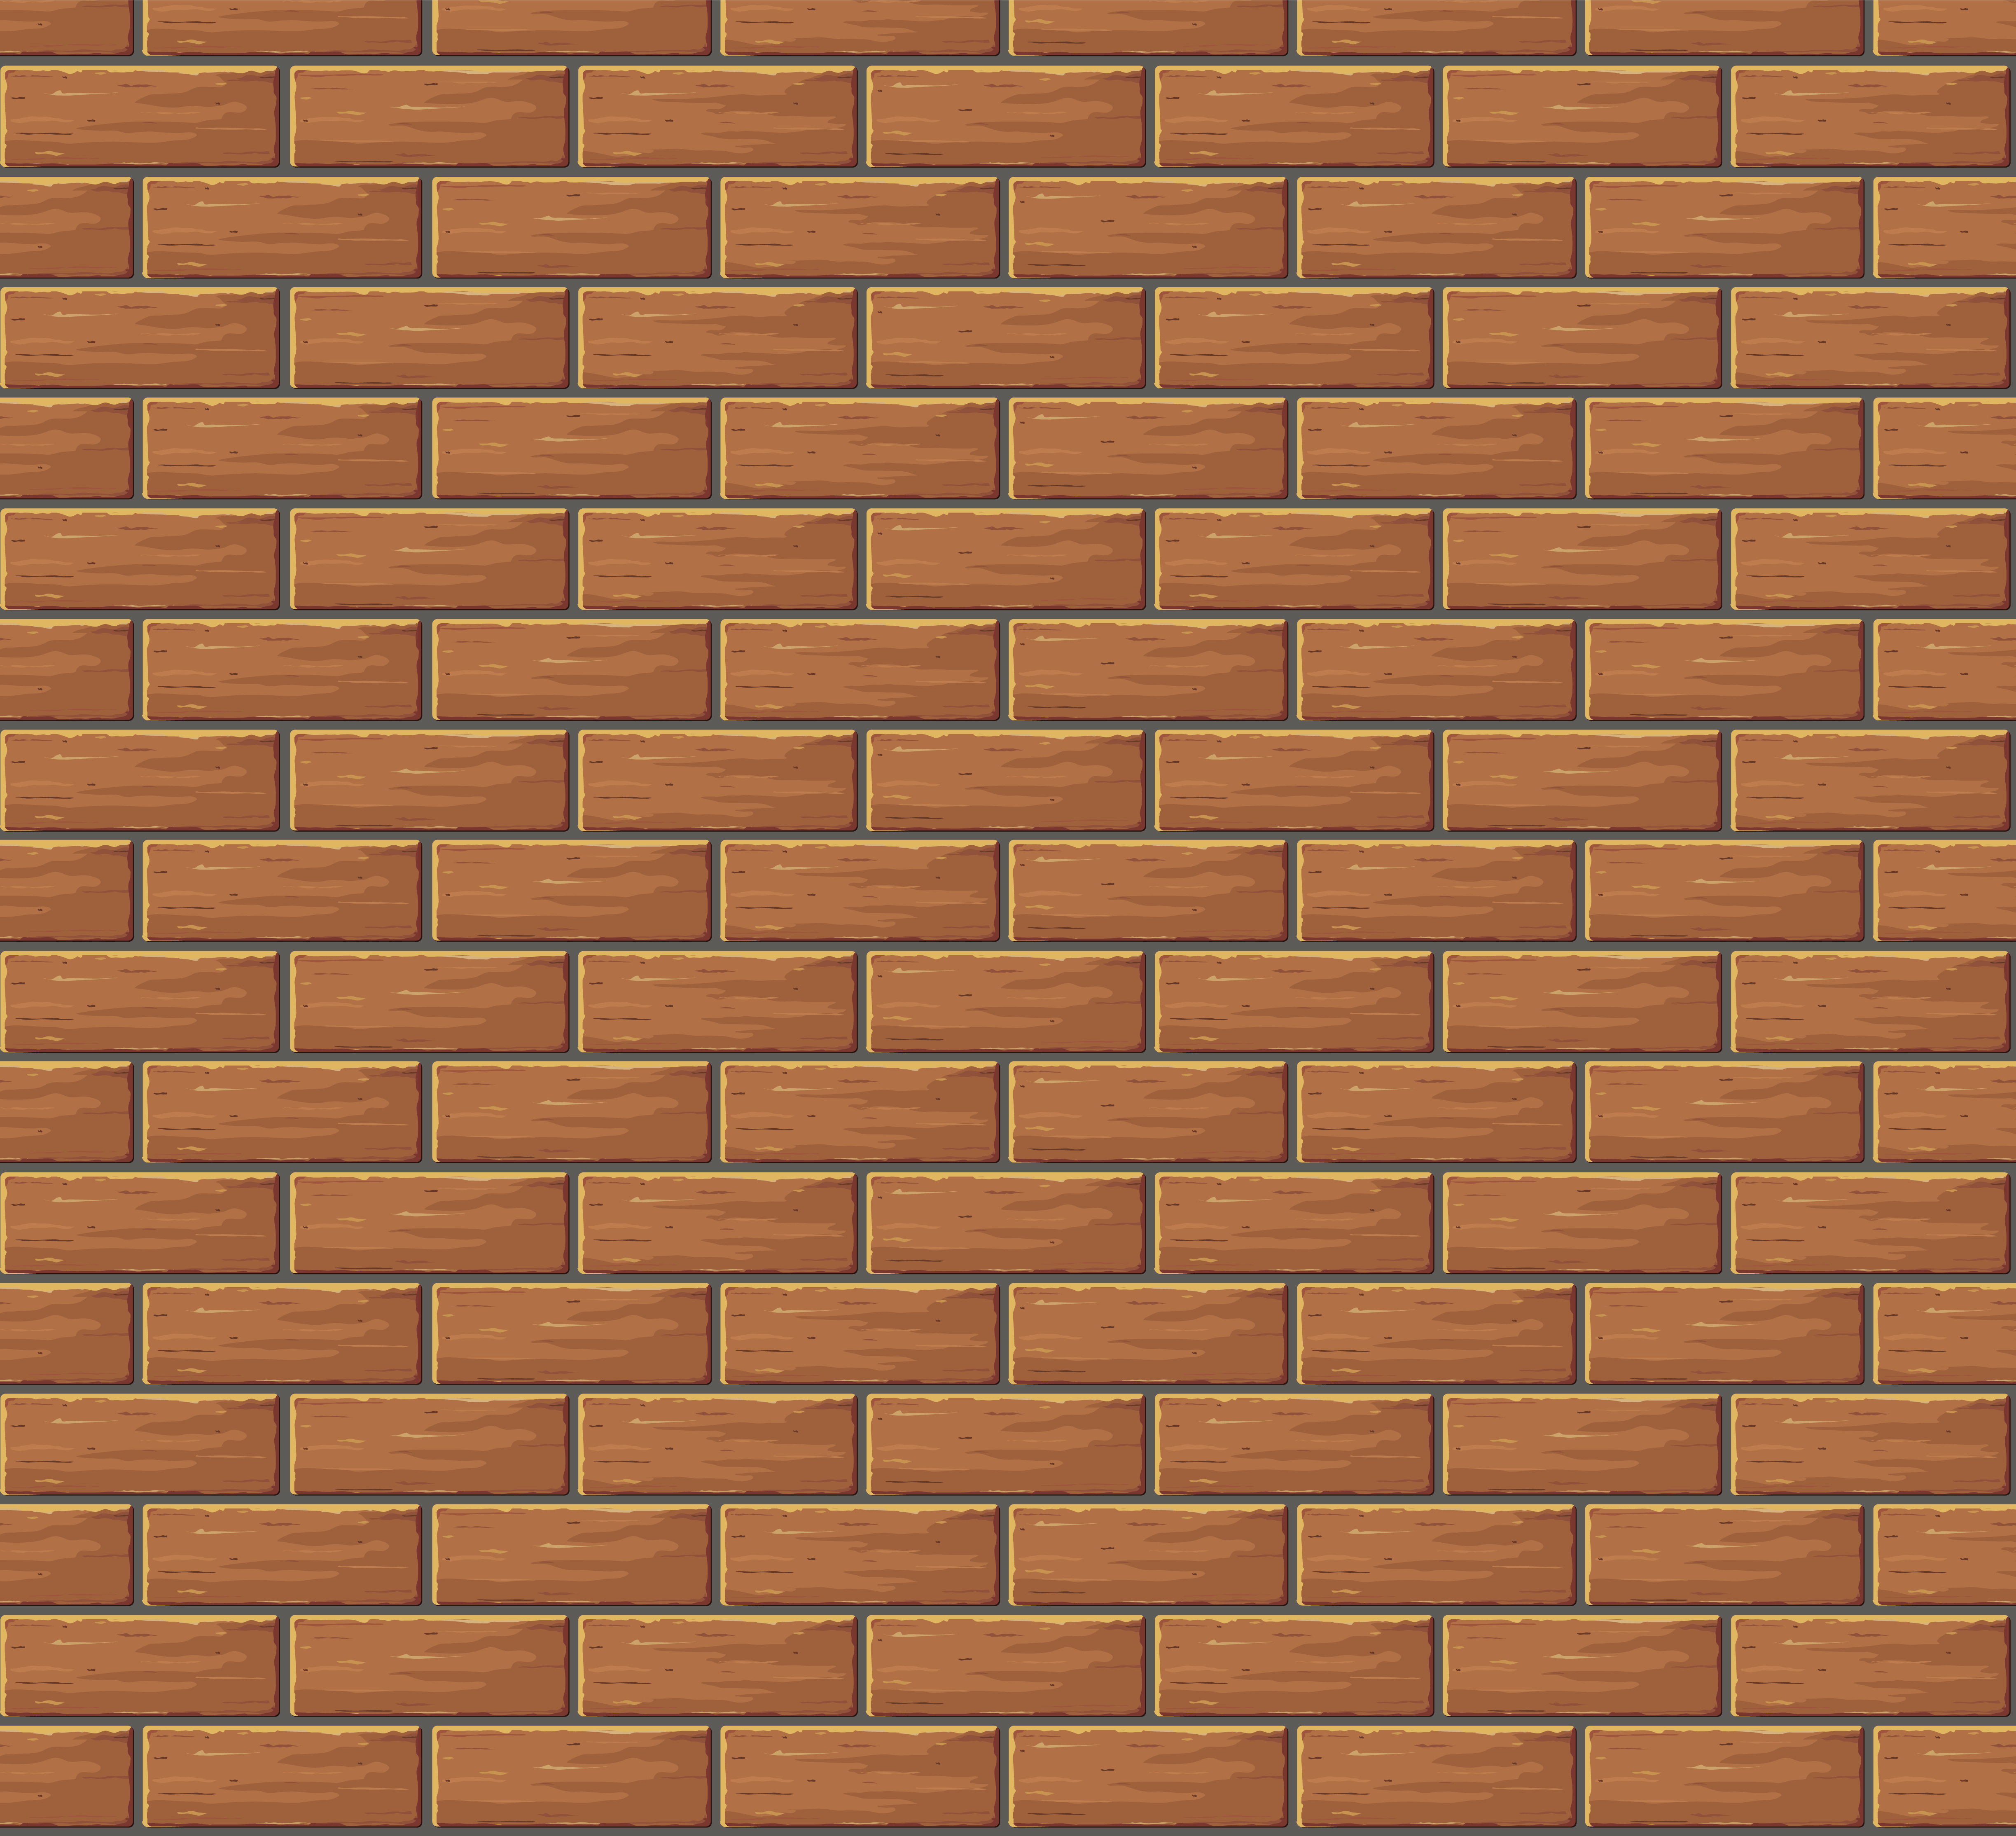 Brick HD PNG - Brick_Wall_Background.